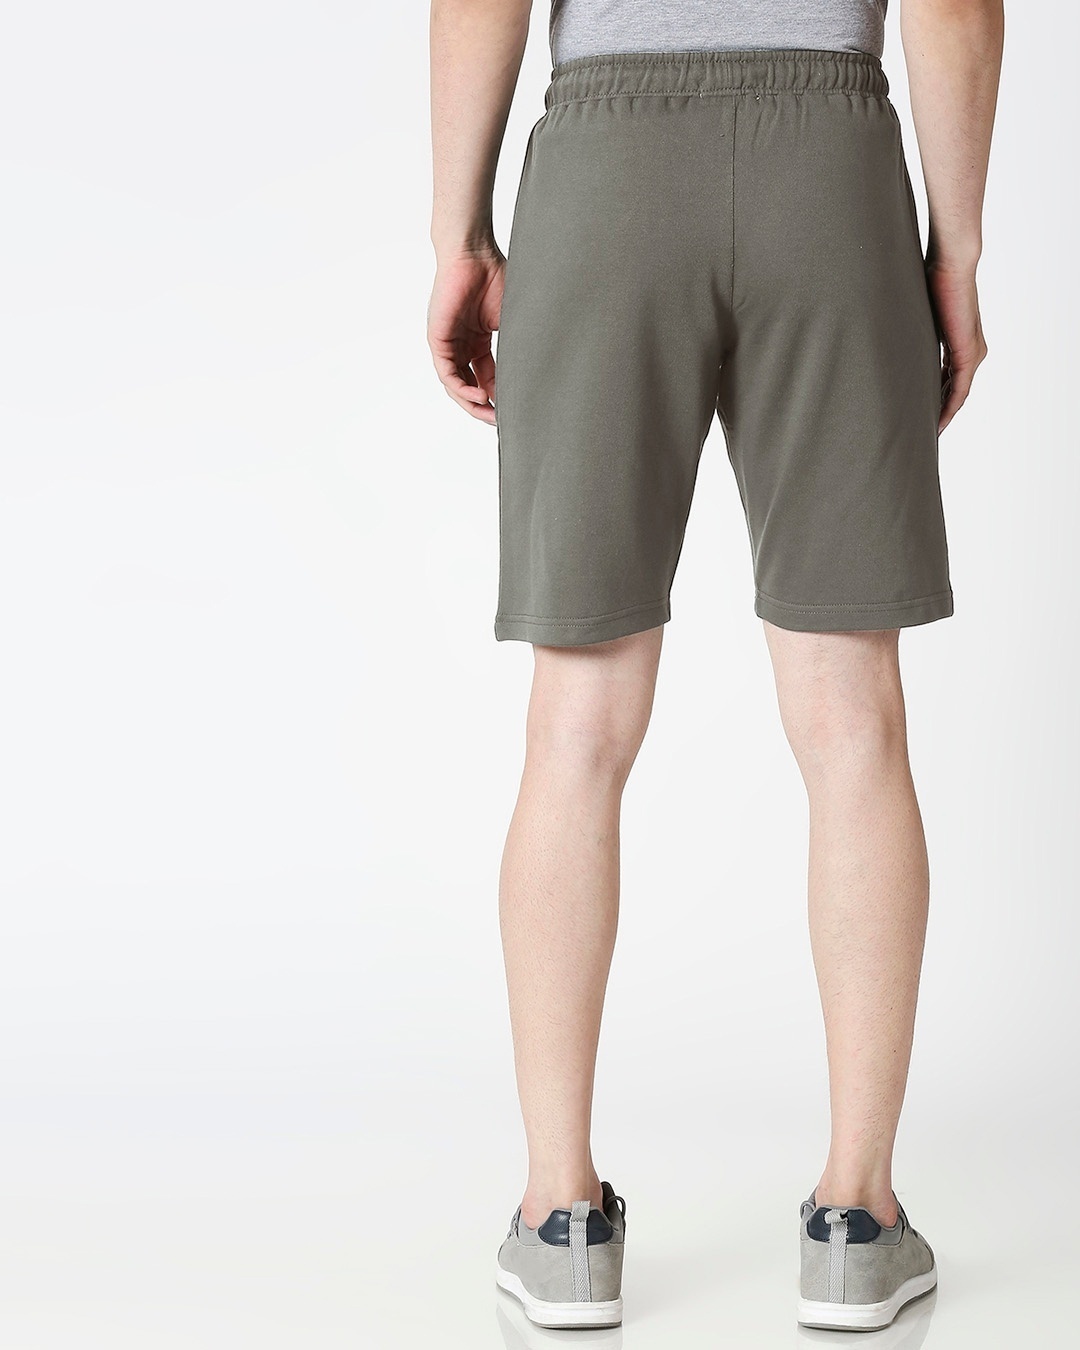 Buy Men's Grey Casual Shorts Online at Bewakoof